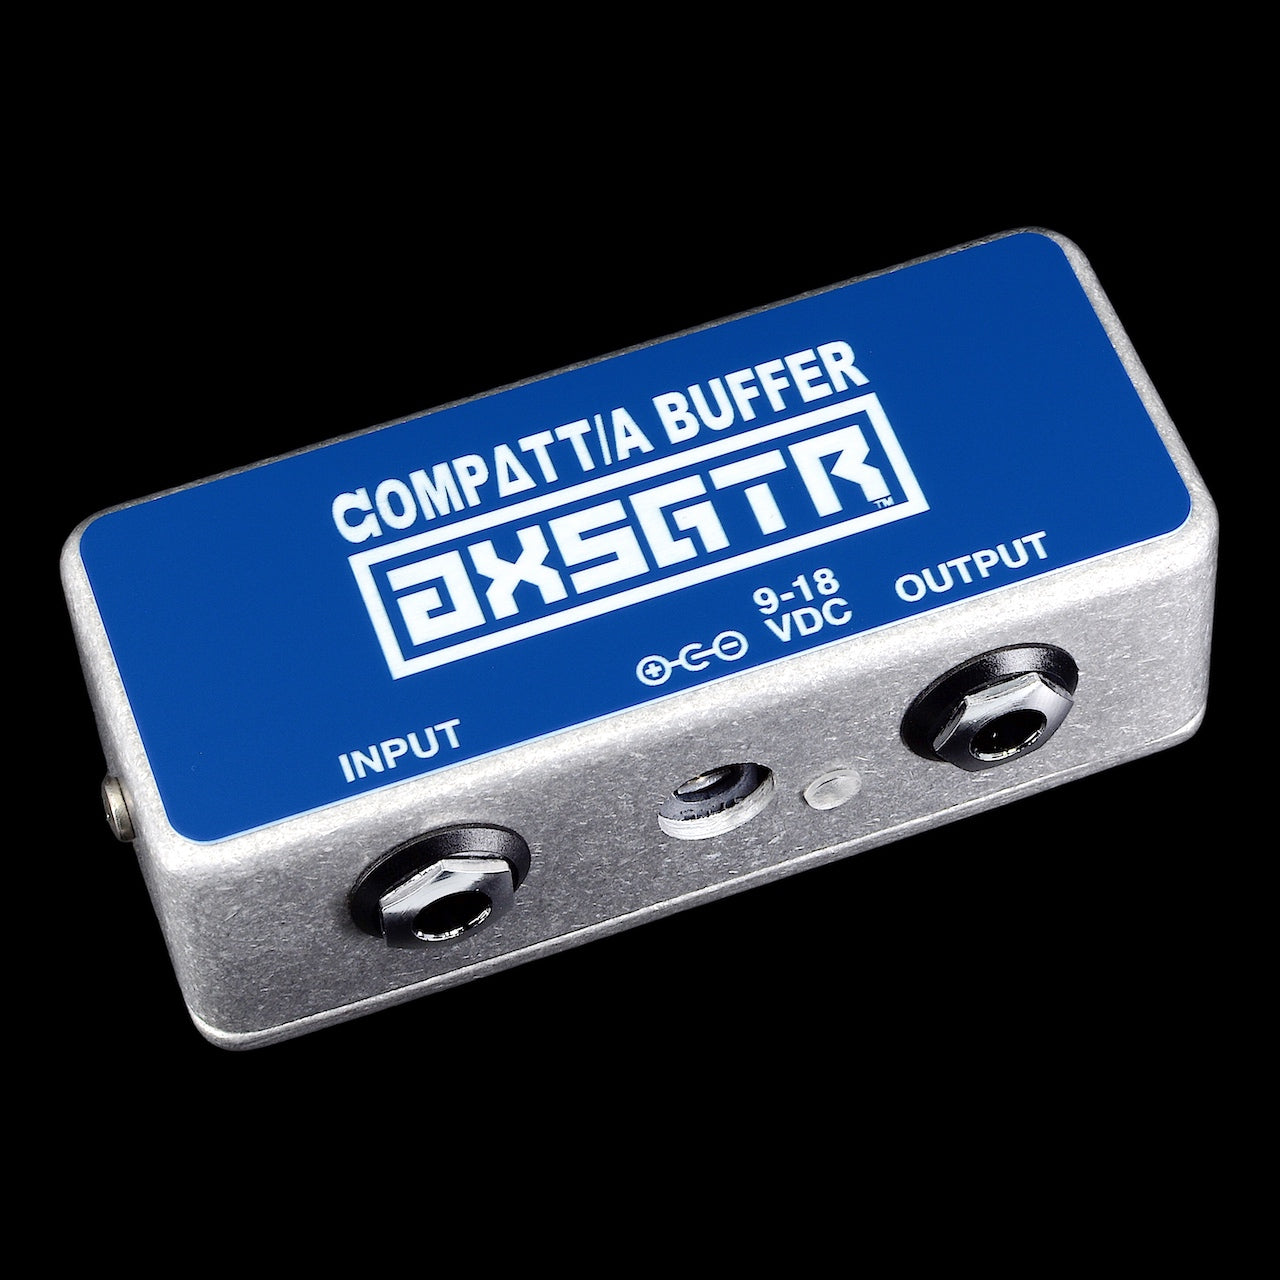 axsgtr axess electronics cpta compatta guitar input buffer blue angled left side